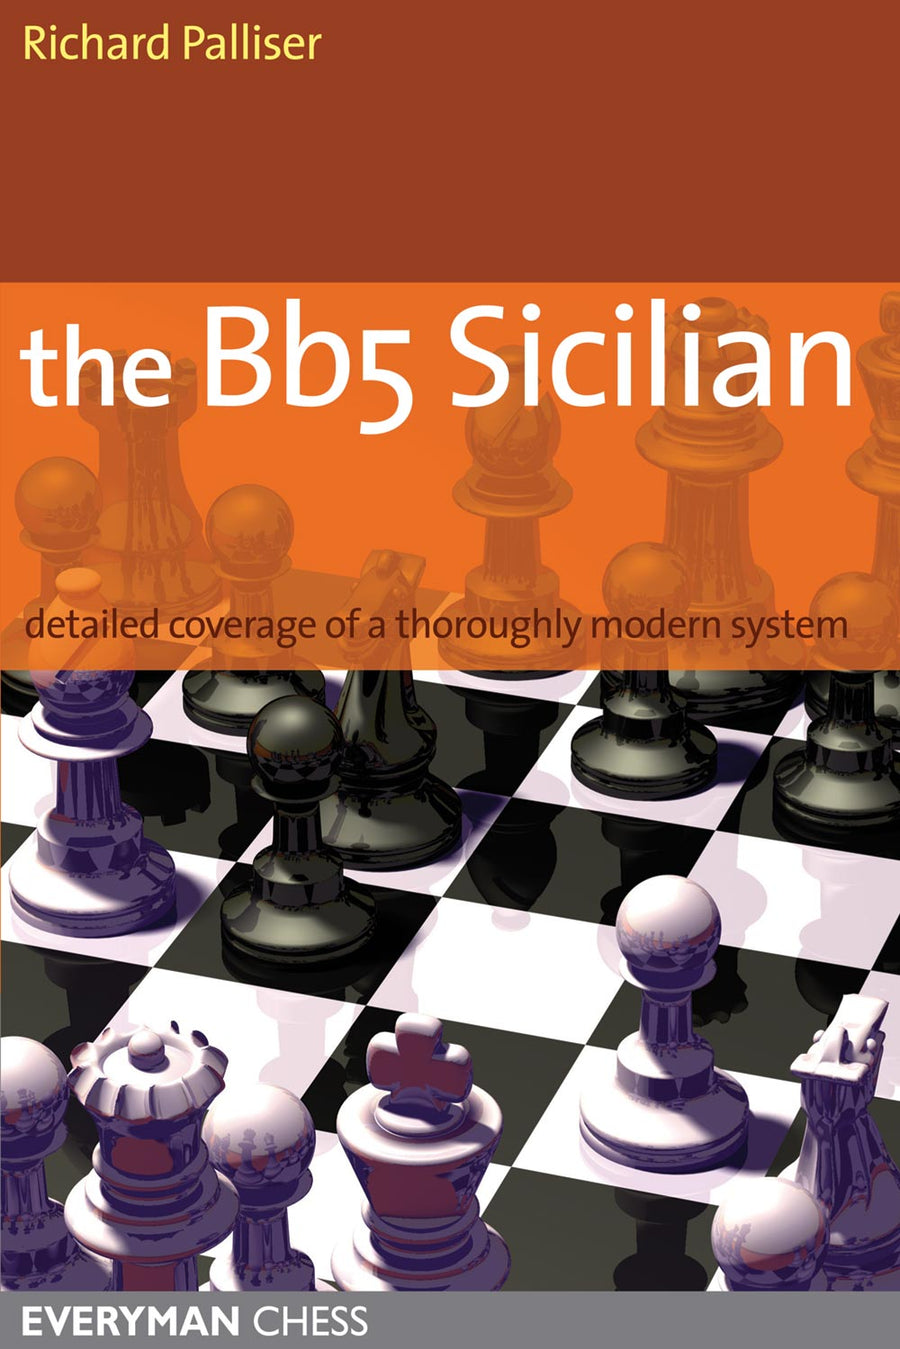 The Sicilian Defense: The Last Decade - 250 Good & Bad Ideas (Chess Book)